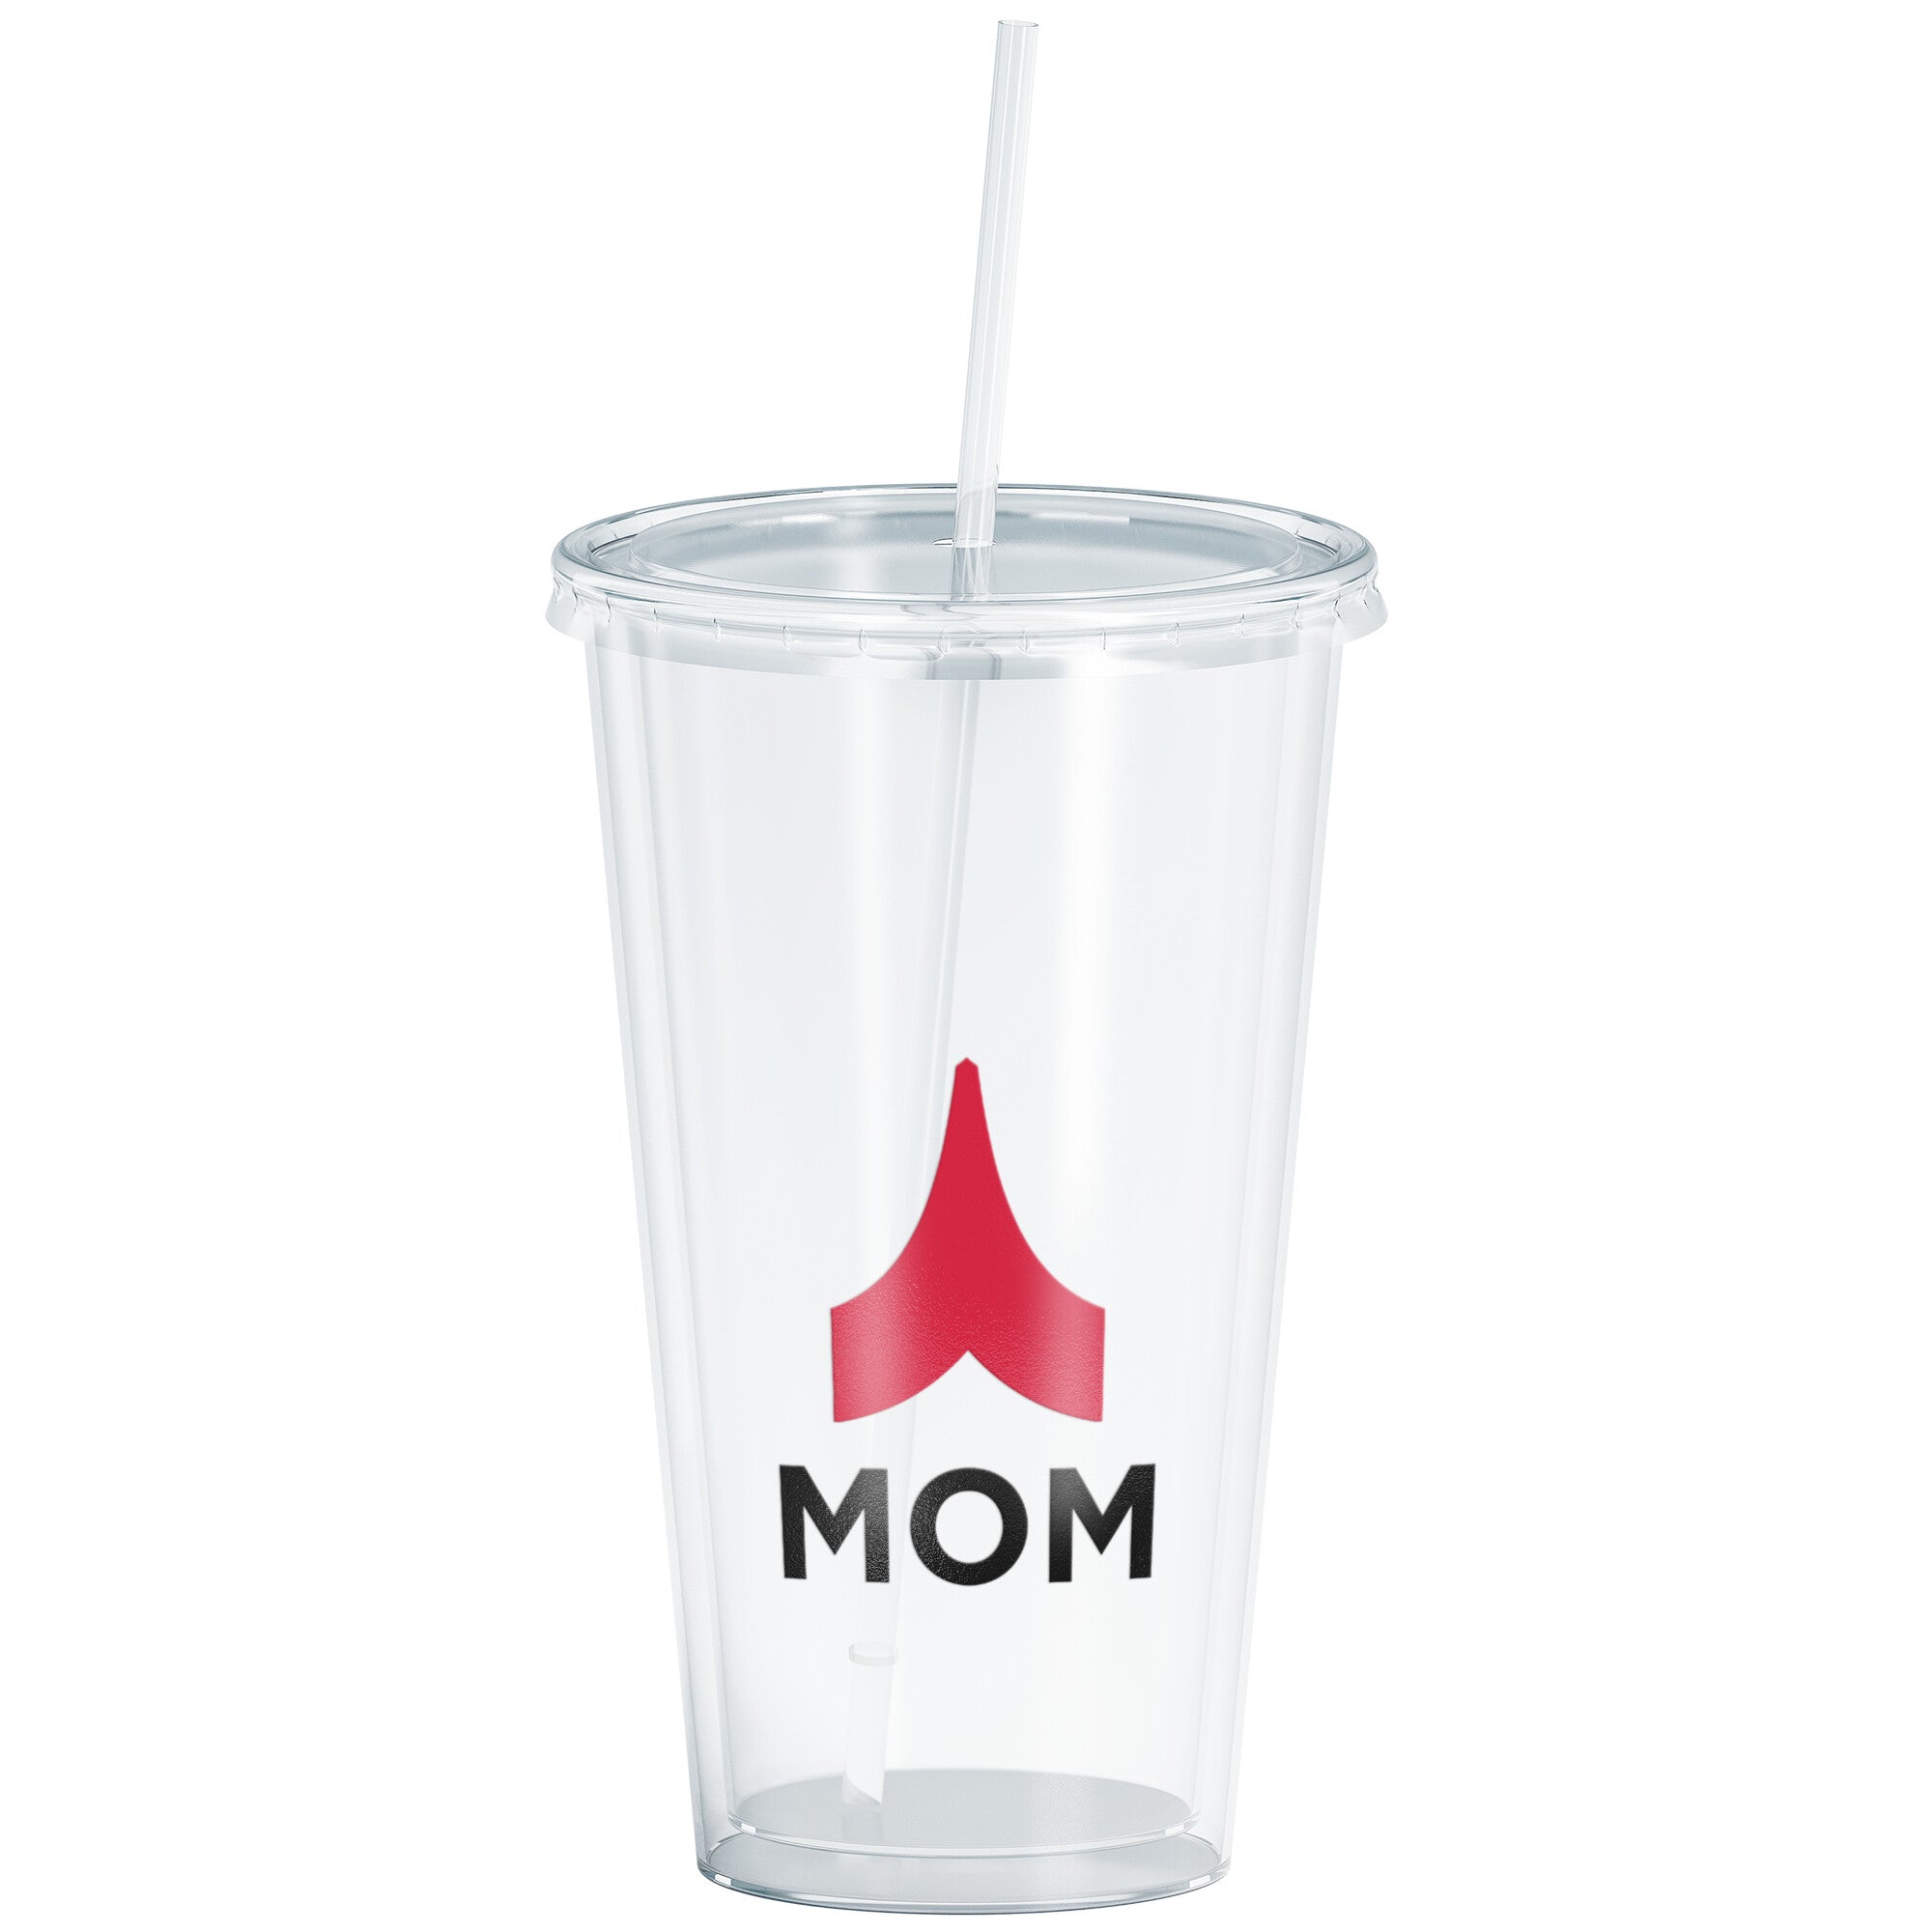 Mom's Acrylic Cup